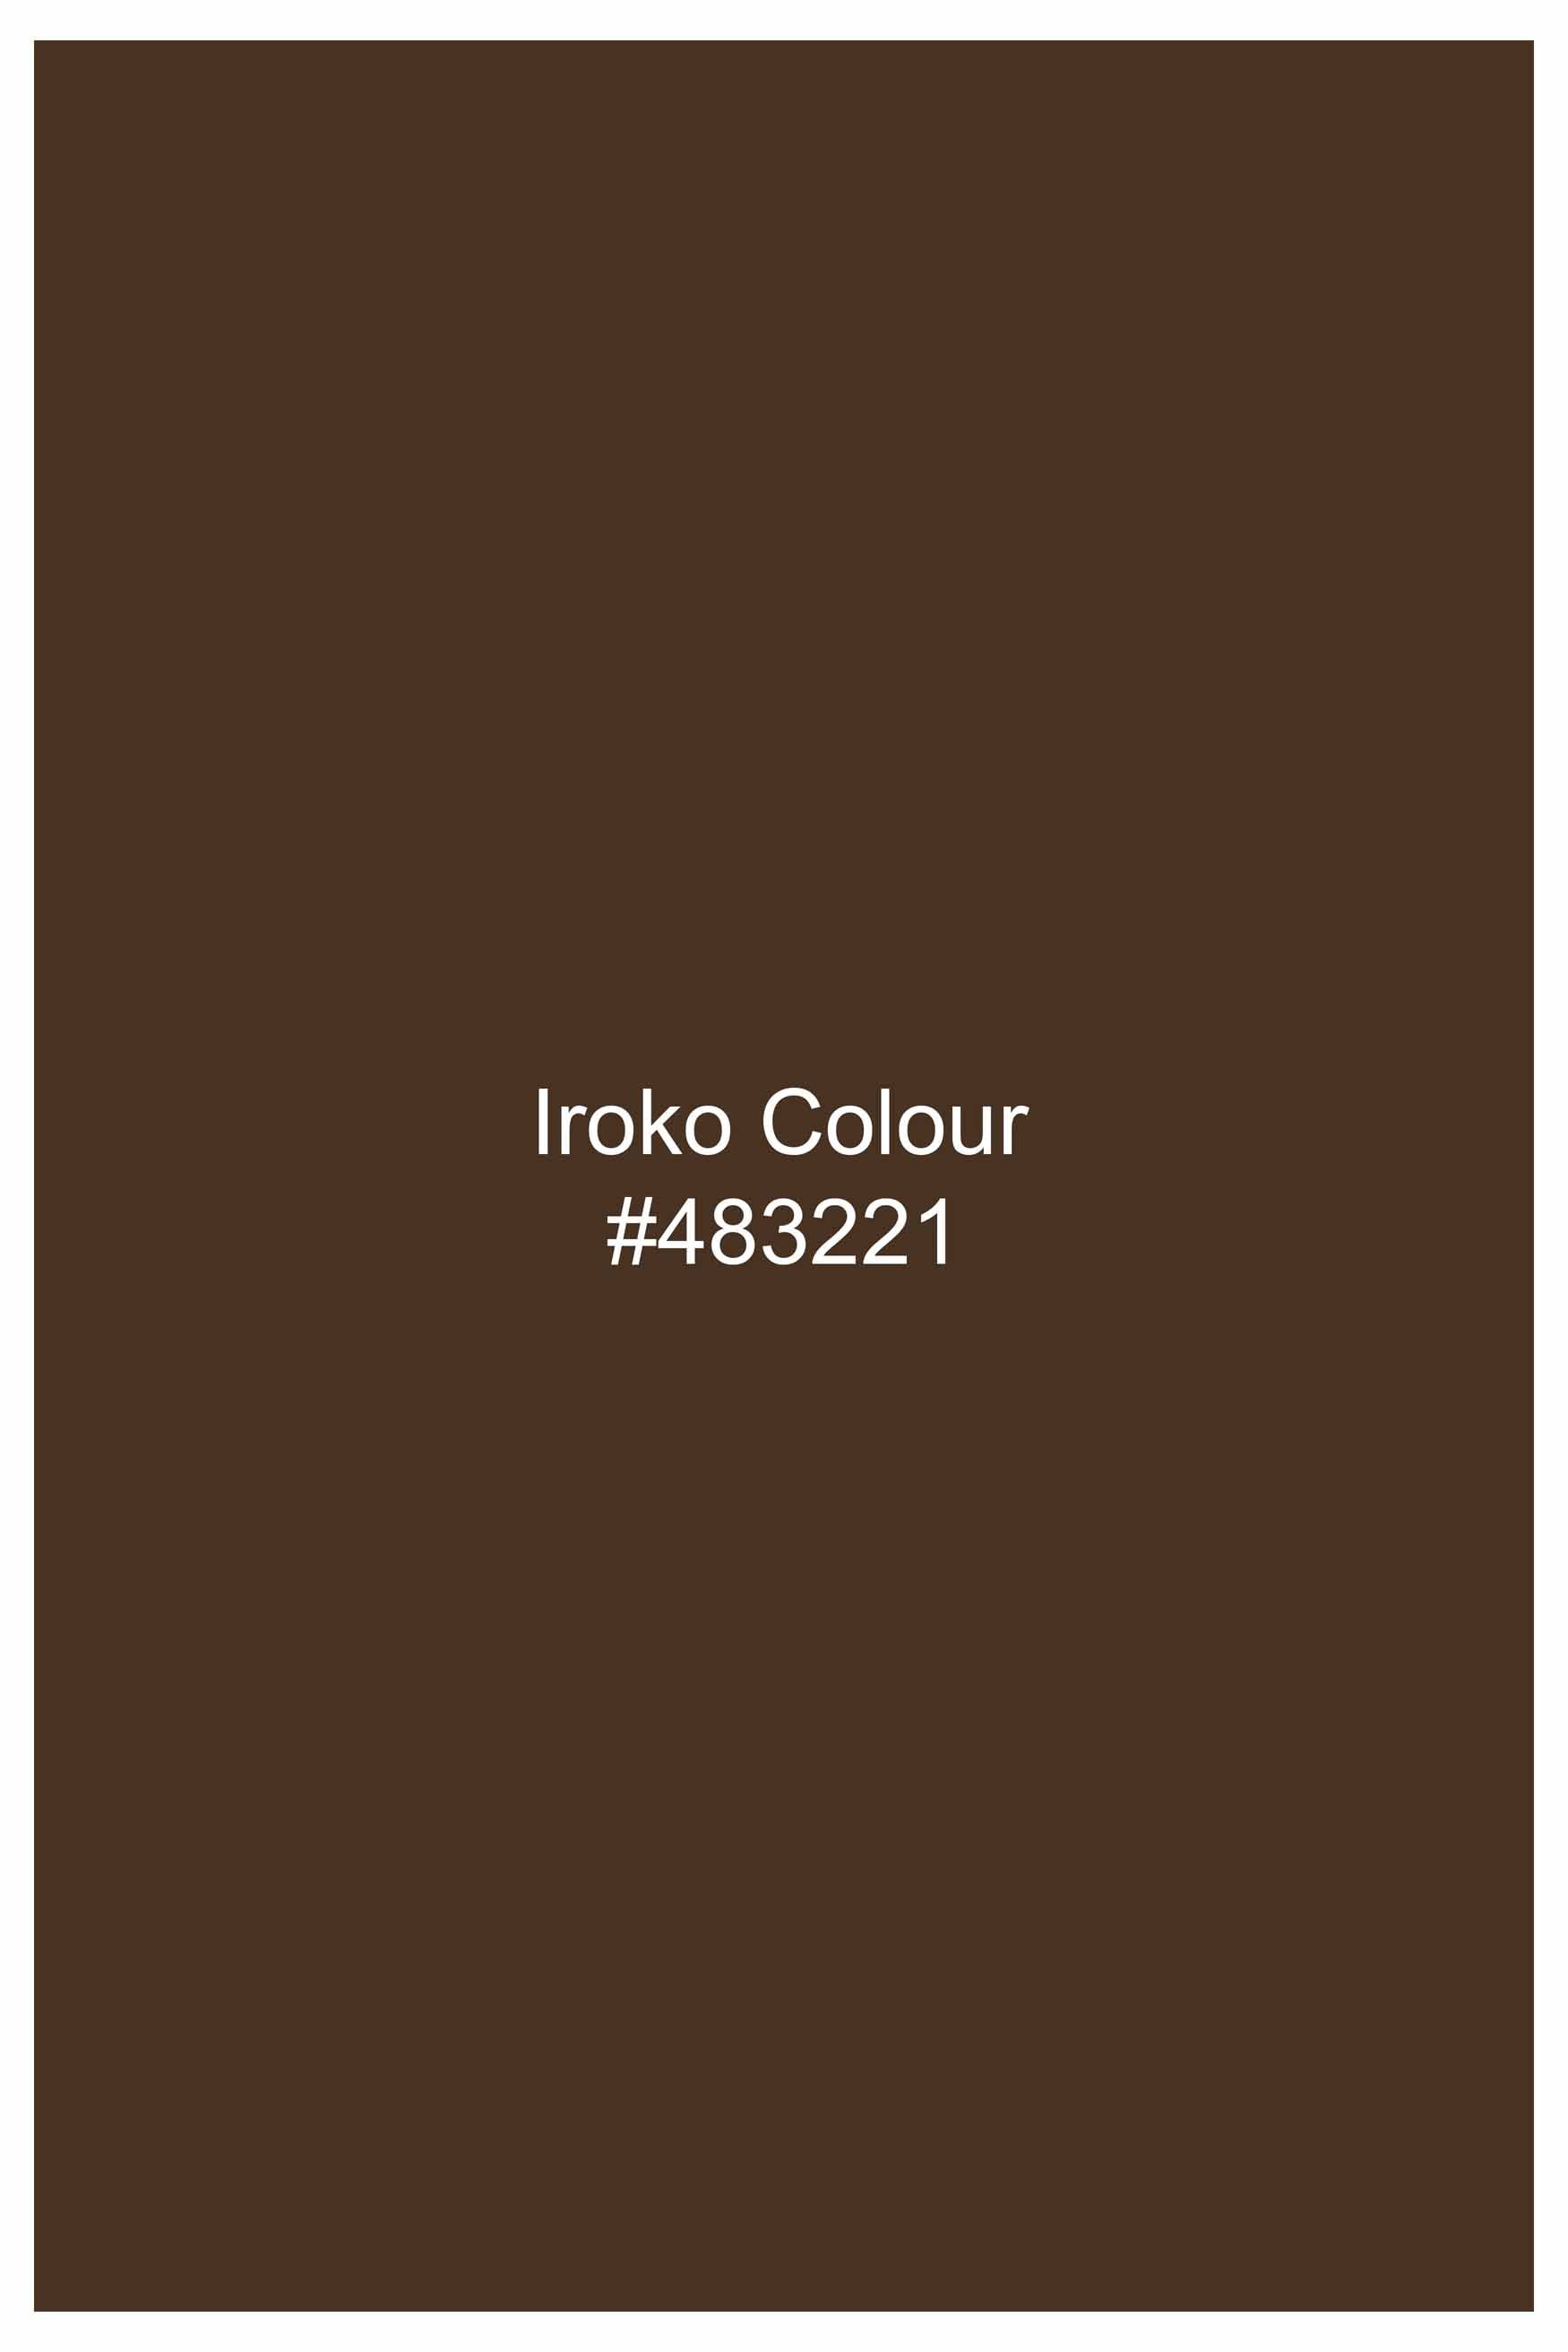 Iroko Brown Lion Embroidered Subtle Sheen Super Soft Premium Cotton Designer Shirt 11336-BLK-E255-38, 11336-BLK-E255-H-38, 11336-BLK-E255-39, 11336-BLK-E255-H-39, 11336-BLK-E255-40, 11336-BLK-E255-H-40, 11336-BLK-E255-42, 11336-BLK-E255-H-42, 11336-BLK-E255-44, 11336-BLK-E255-H-44, 11336-BLK-E255-46, 11336-BLK-E255-H-46, 11336-BLK-E255-48, 11336-BLK-E255-H-48, 11336-BLK-E255-50, 11336-BLK-E255-H-50, 11336-BLK-E255-52, 11336-BLK-E255-H-52